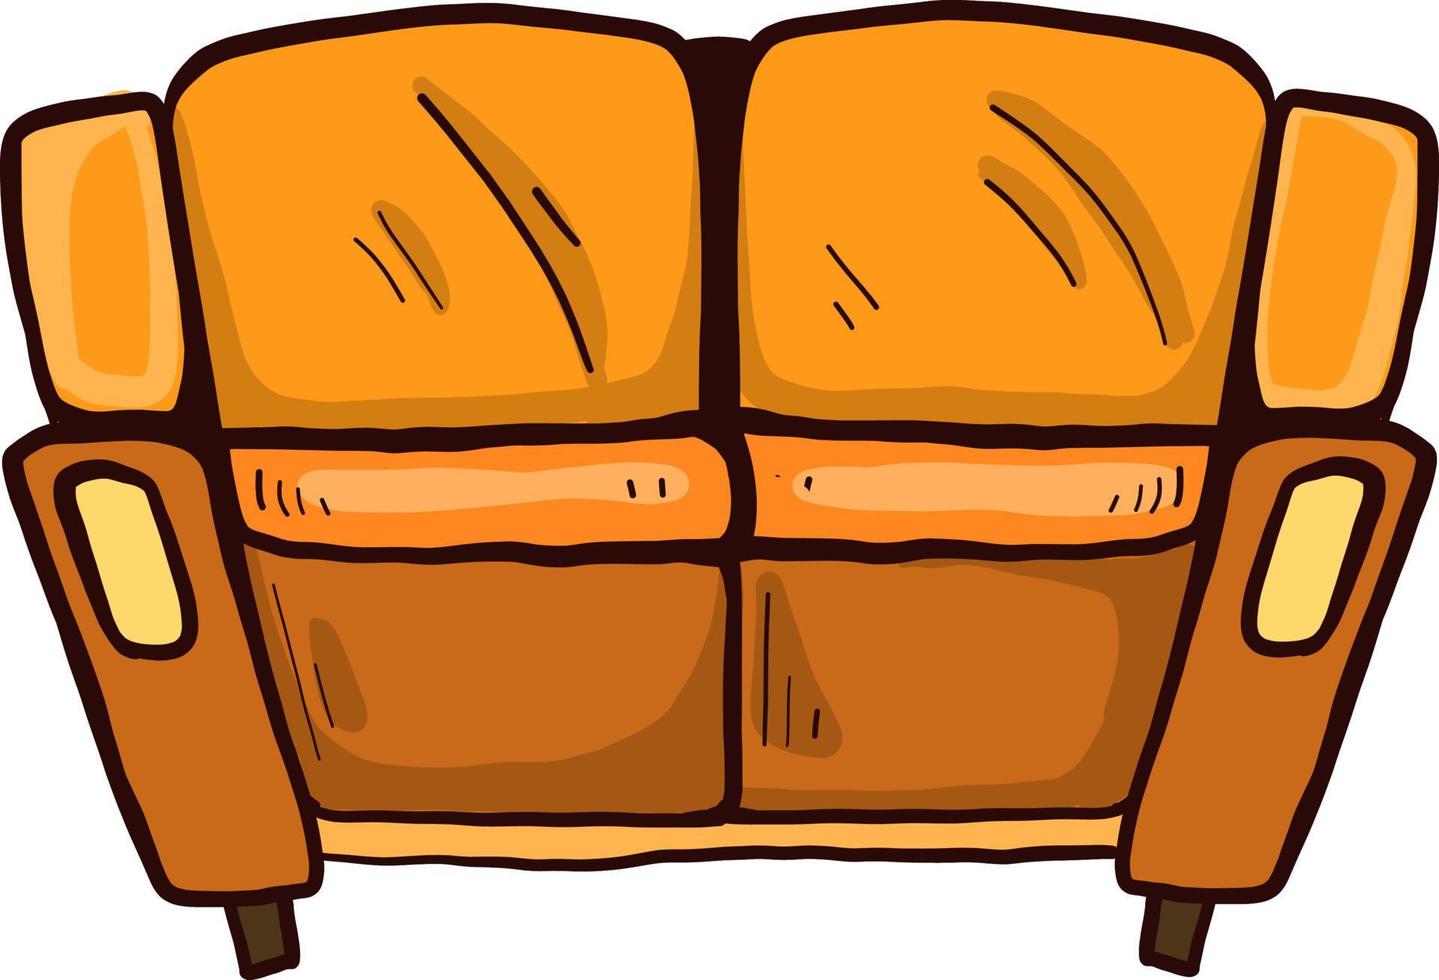 pequeno sofá laranja, ilustração, vetor em fundo branco